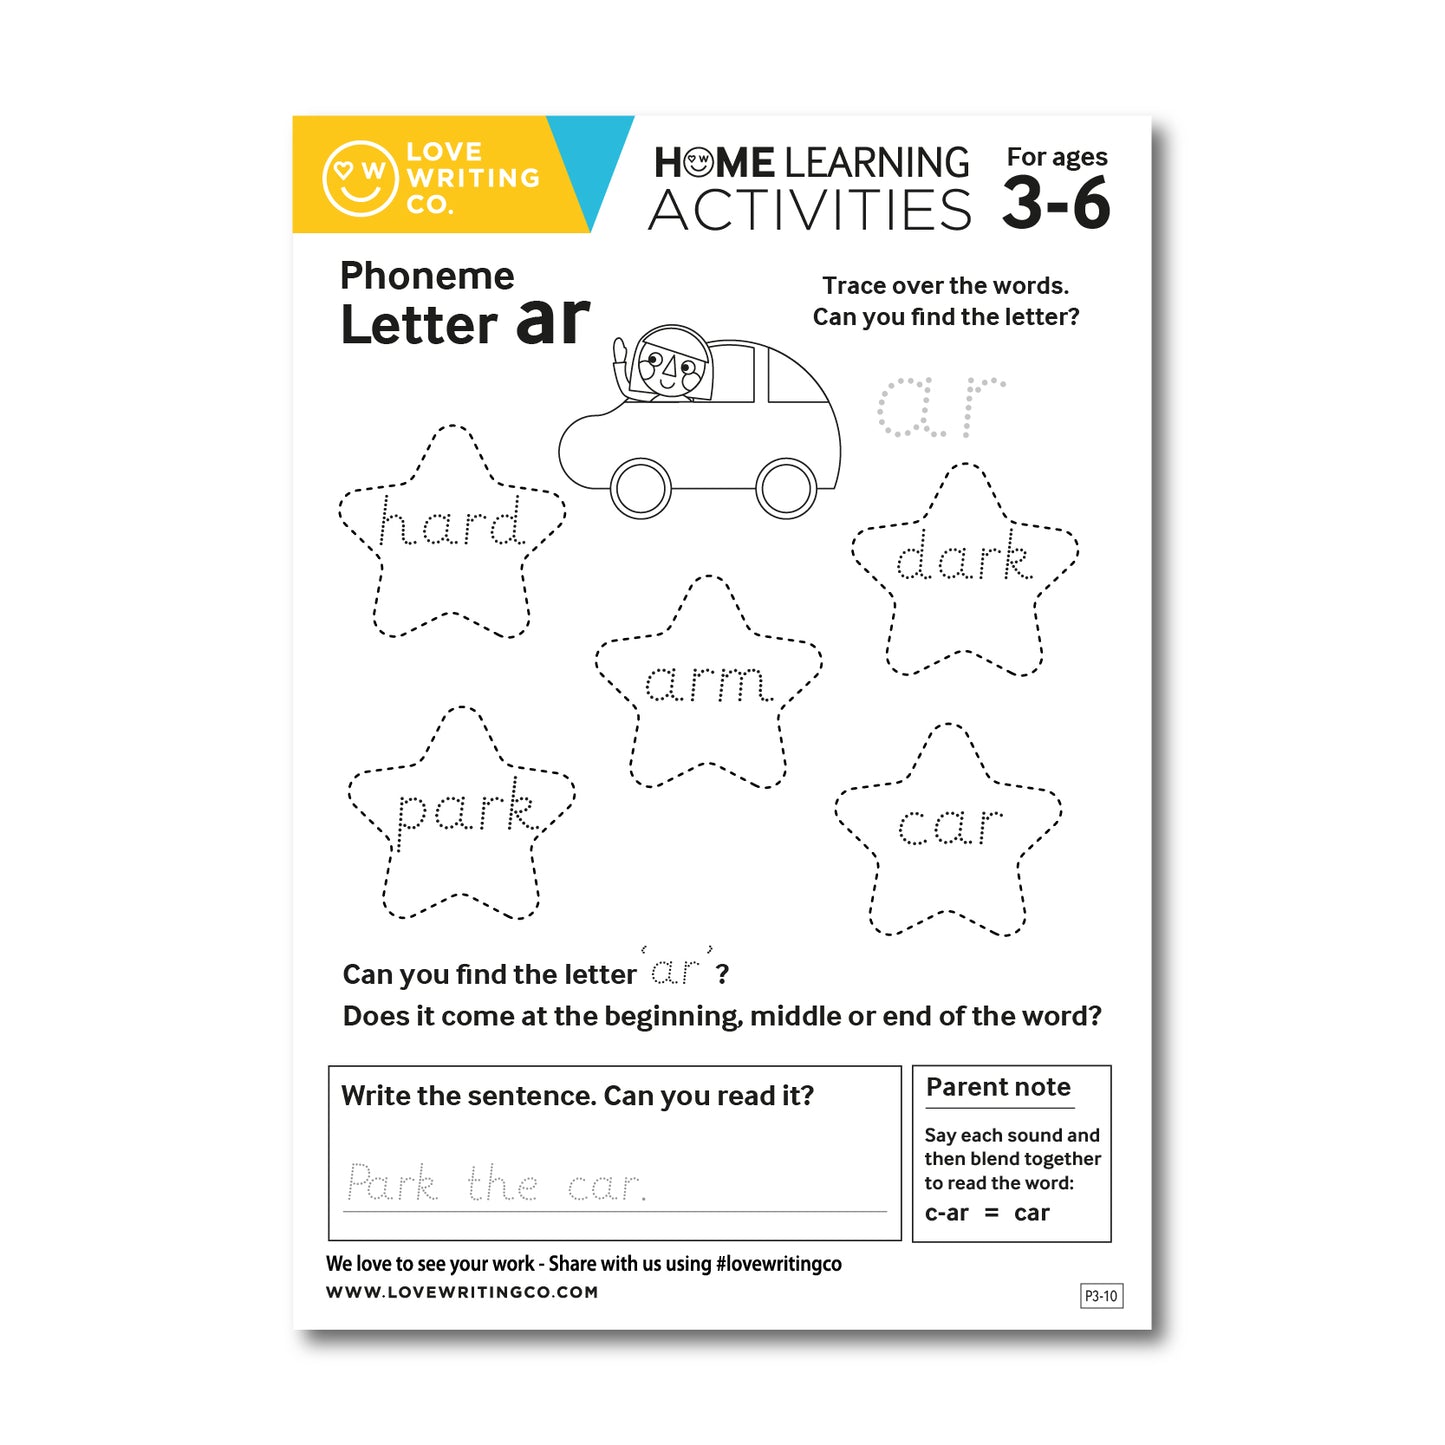 Phoneme Letter AR activities